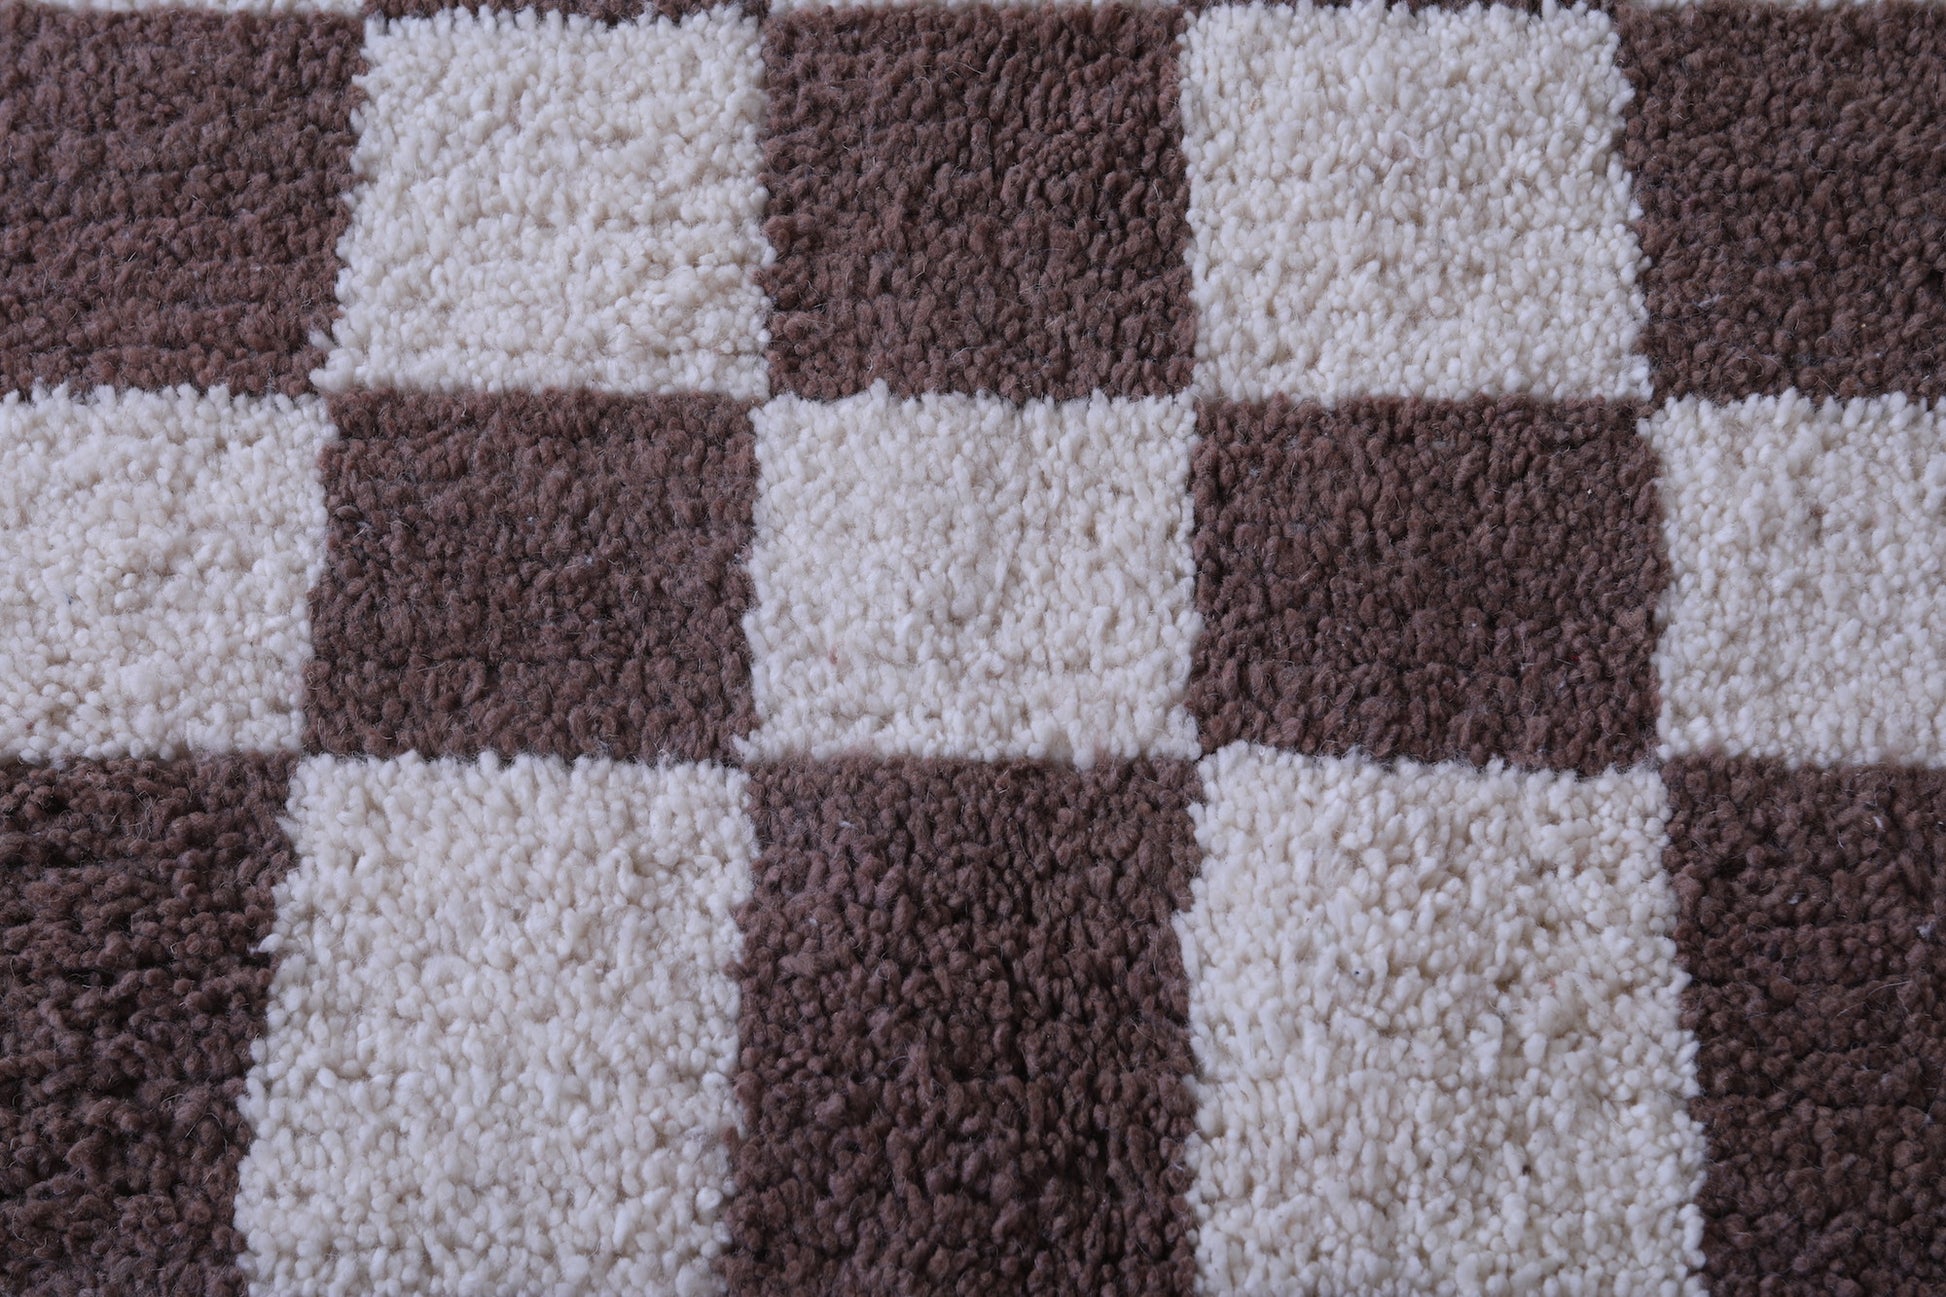 Custom handmade berebr rug - Checkered moroccan carpet